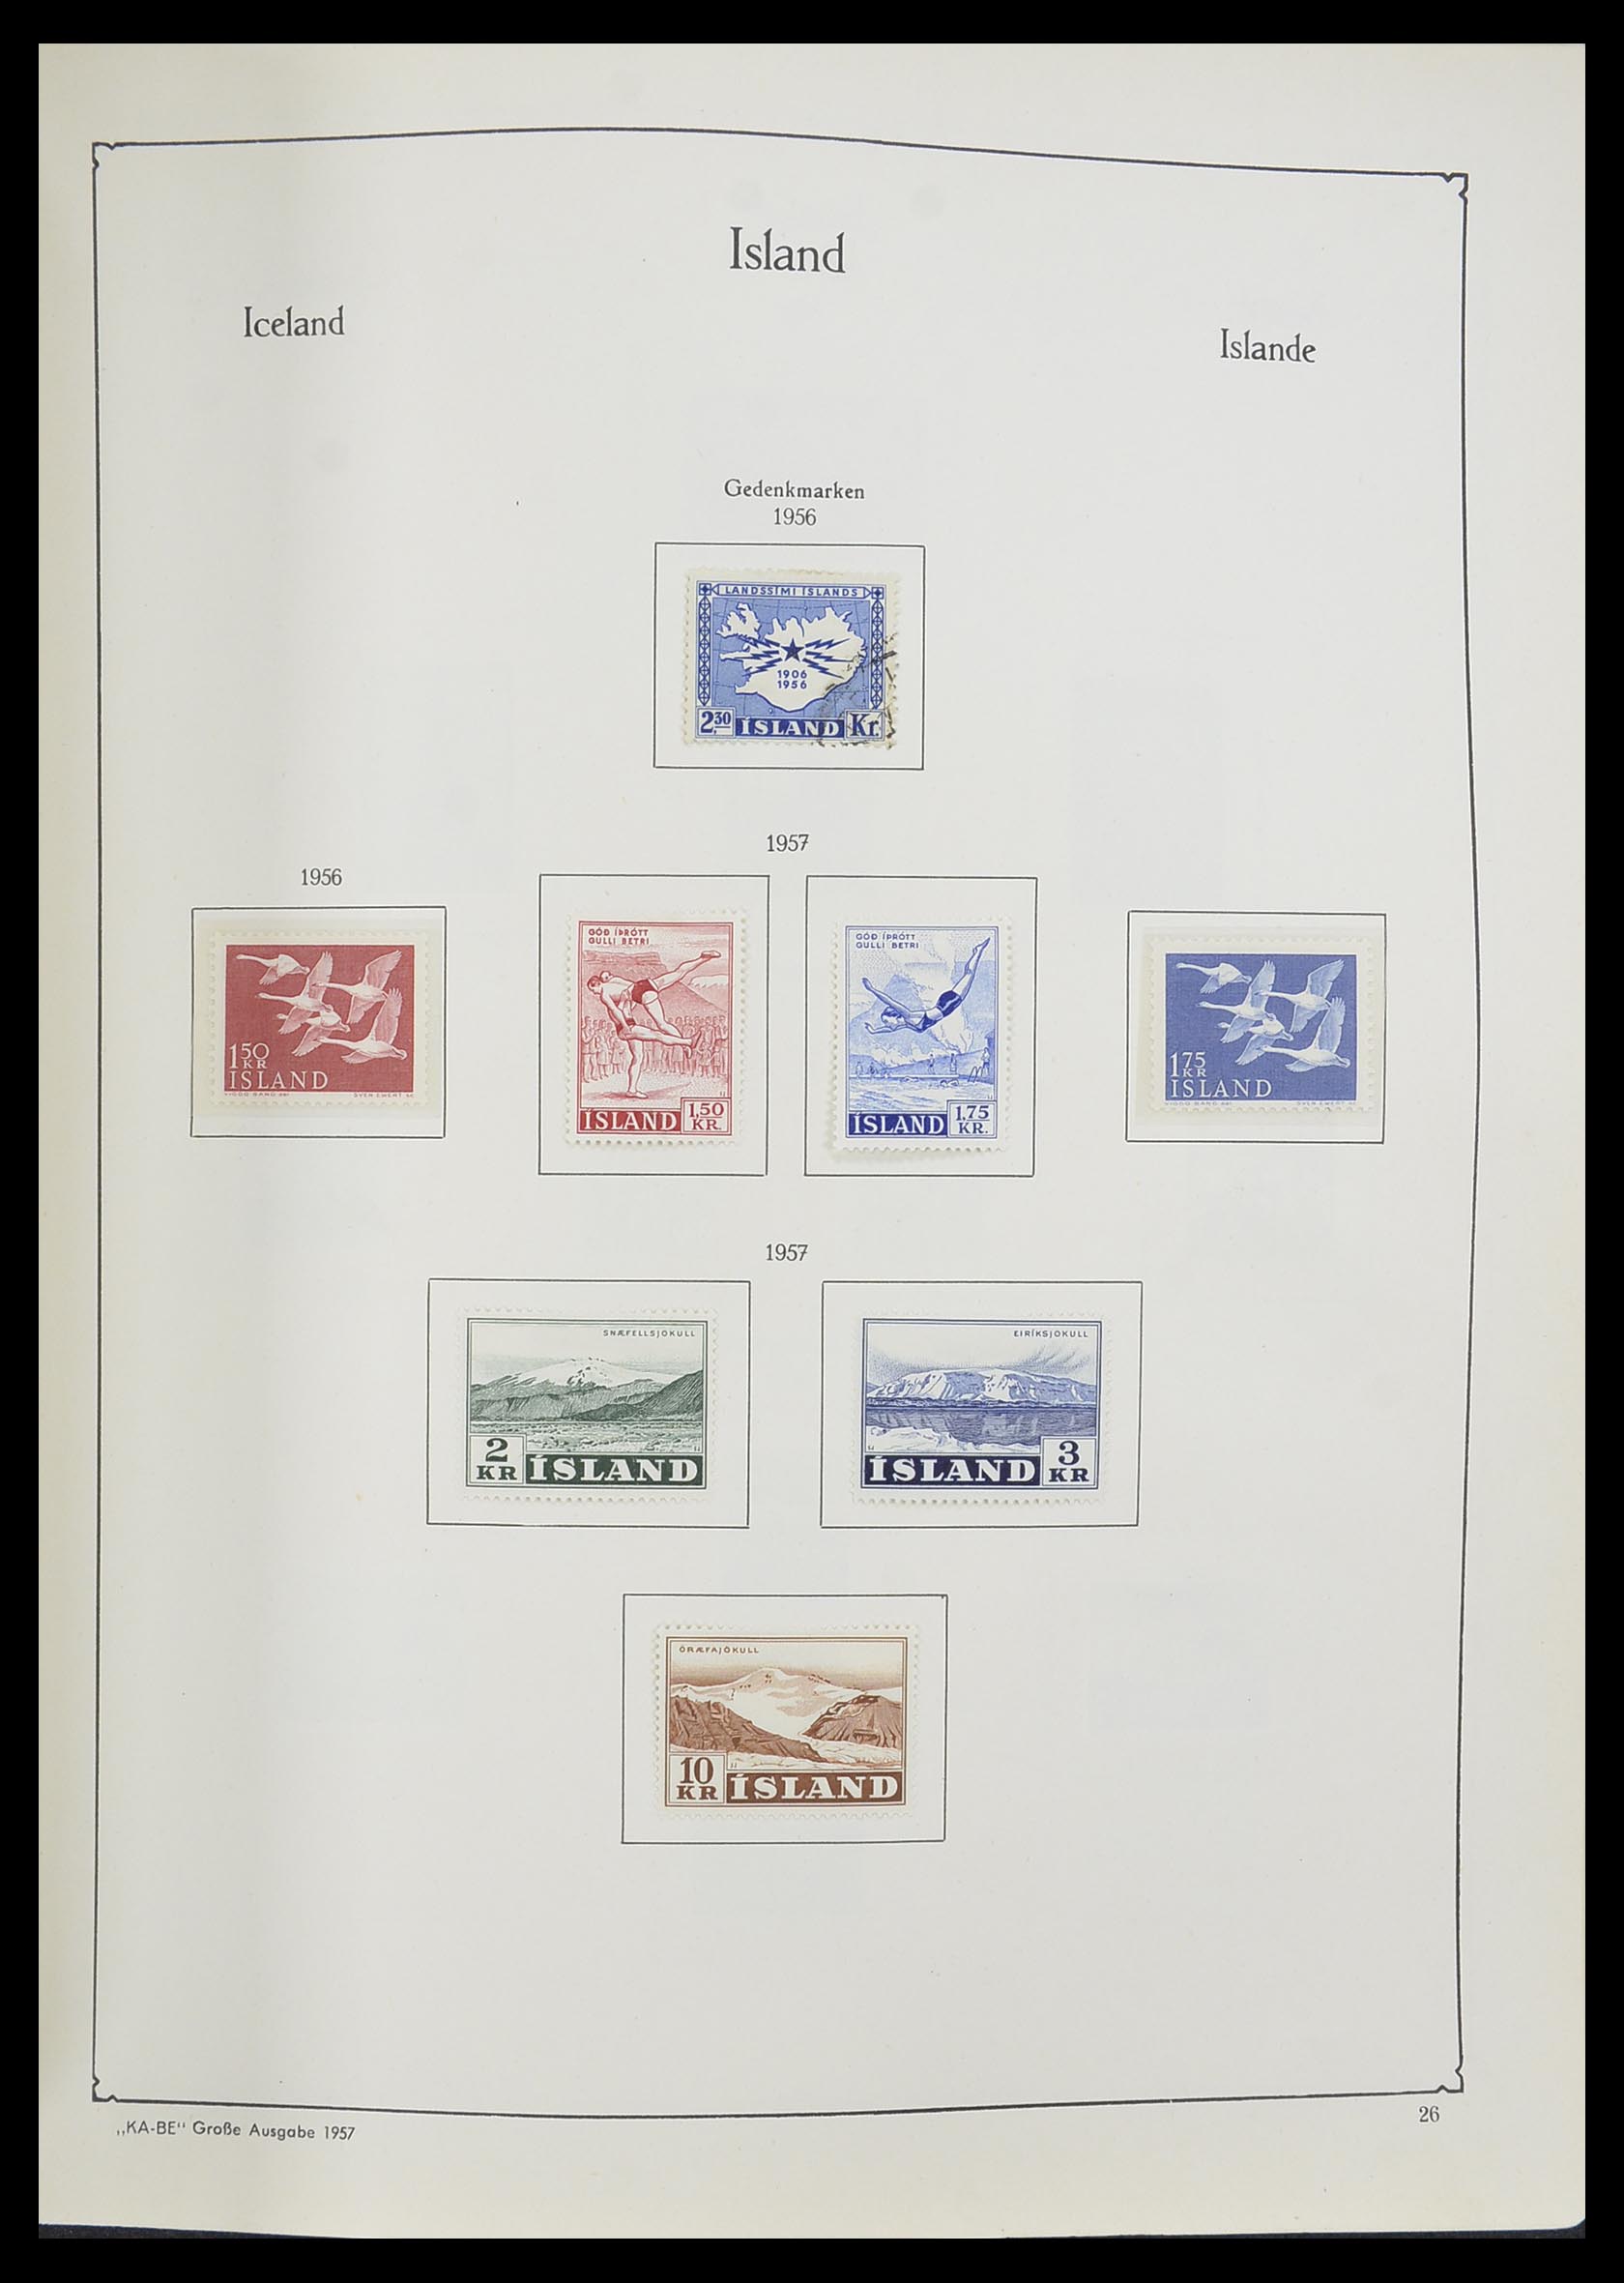 33379 082 - Stamp collection 33379 Scandinavia 1856-1972.